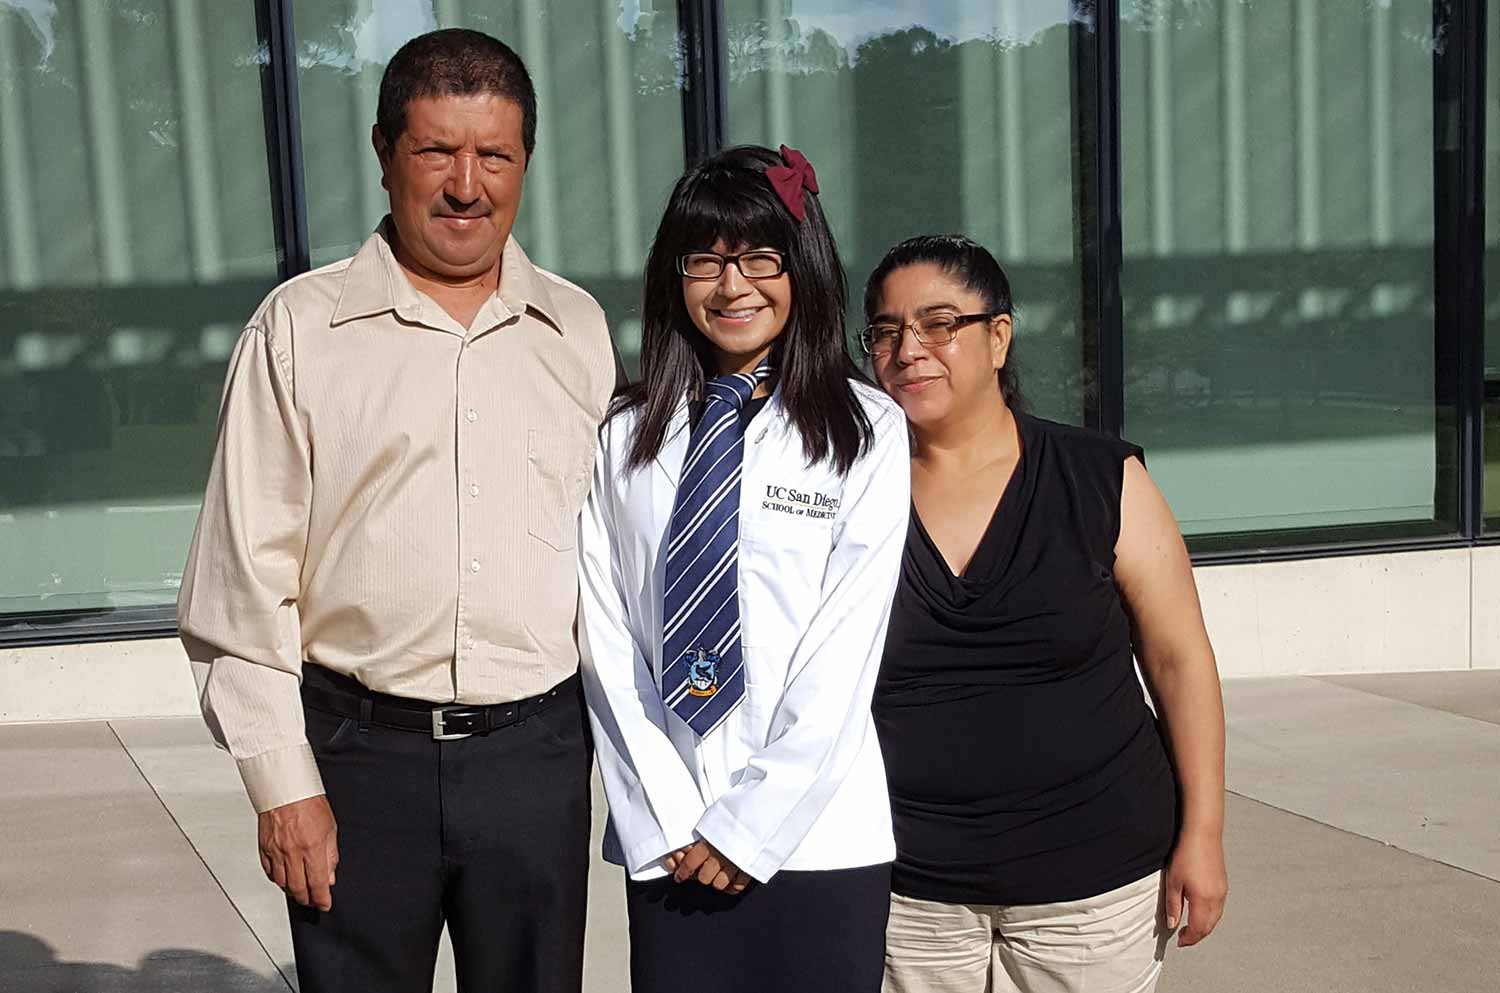 Maribel Patiño and her parents